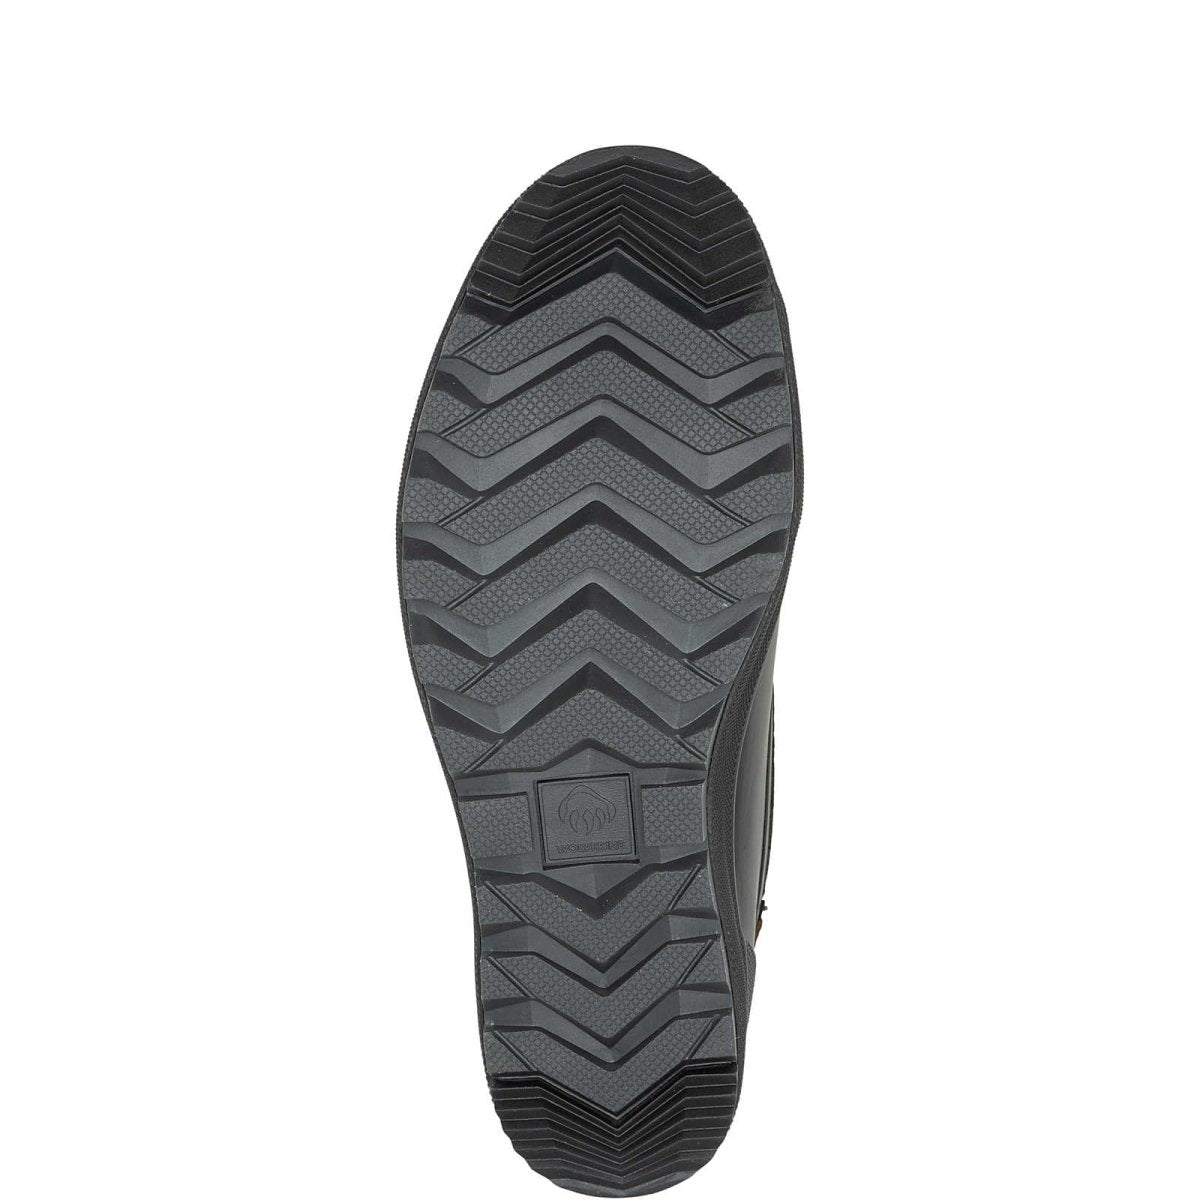 WOLVERINE TORRENT TREK MEN'S EPX WATERPROOF INSULATED CHELSEA (W880521) IN BLACK - TLW Shoes